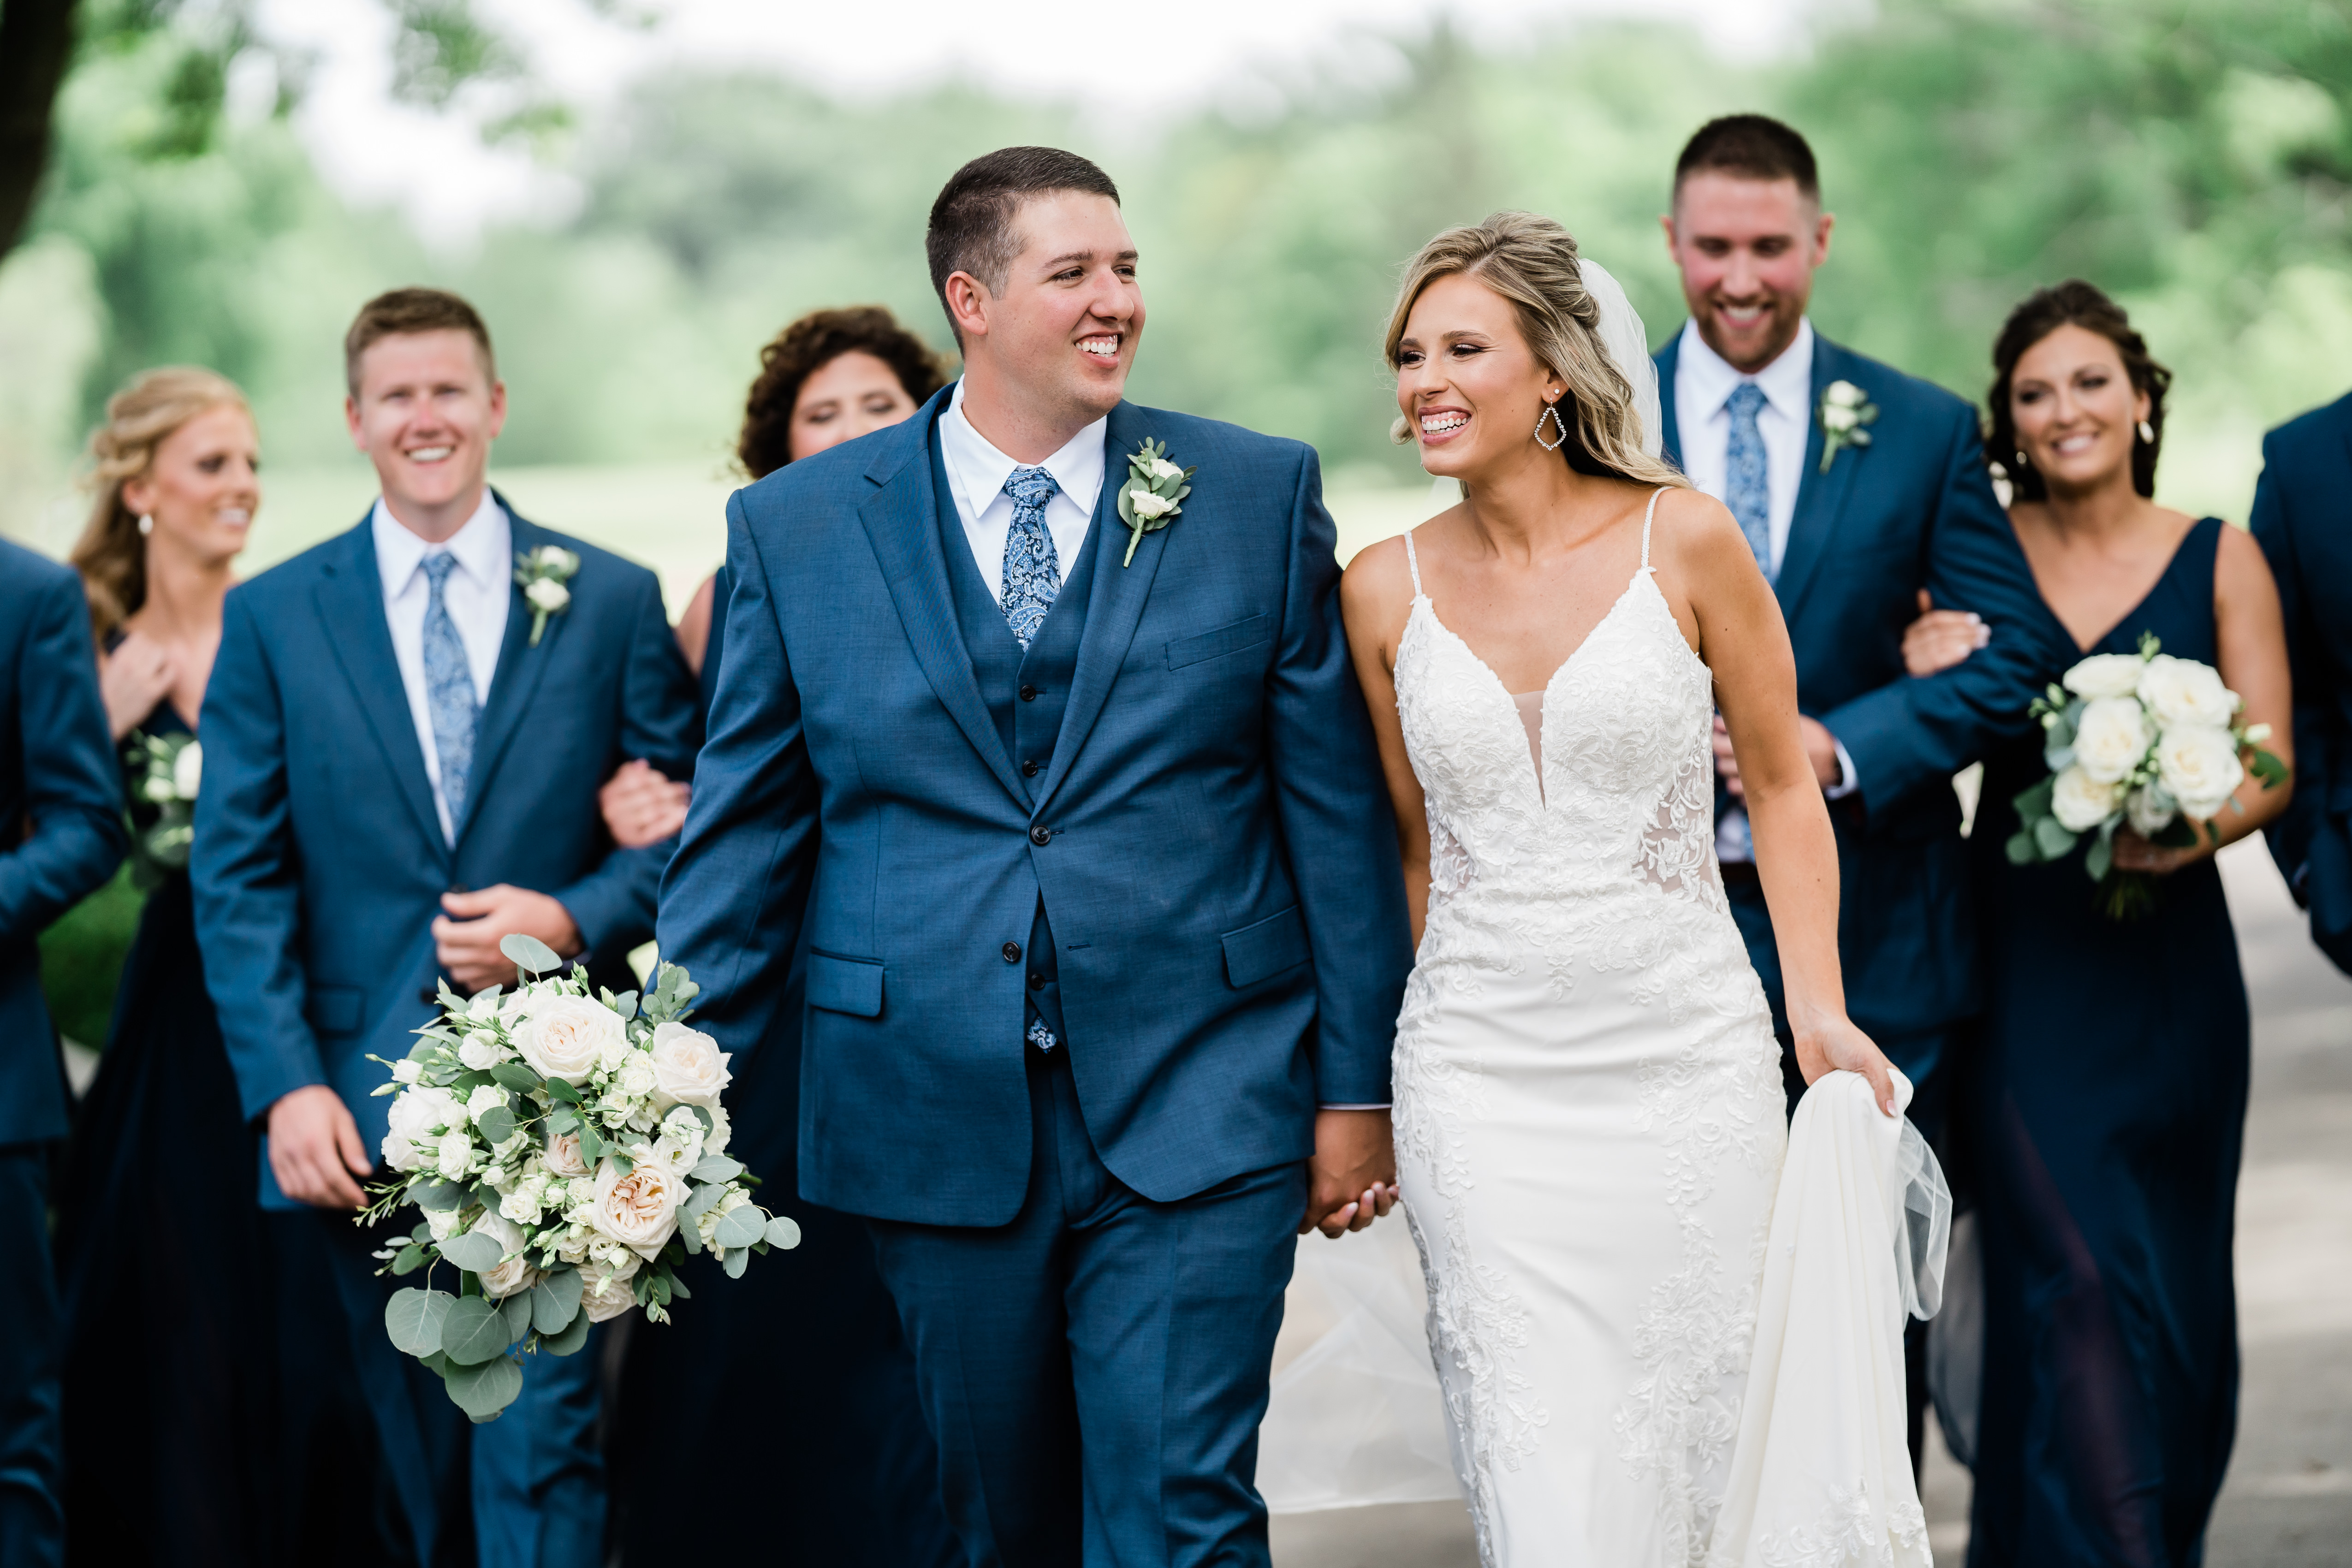 Fort Wayne wedding photographers capture bride and groom walking together on wedding day after they choose fort wayne wedding photographers